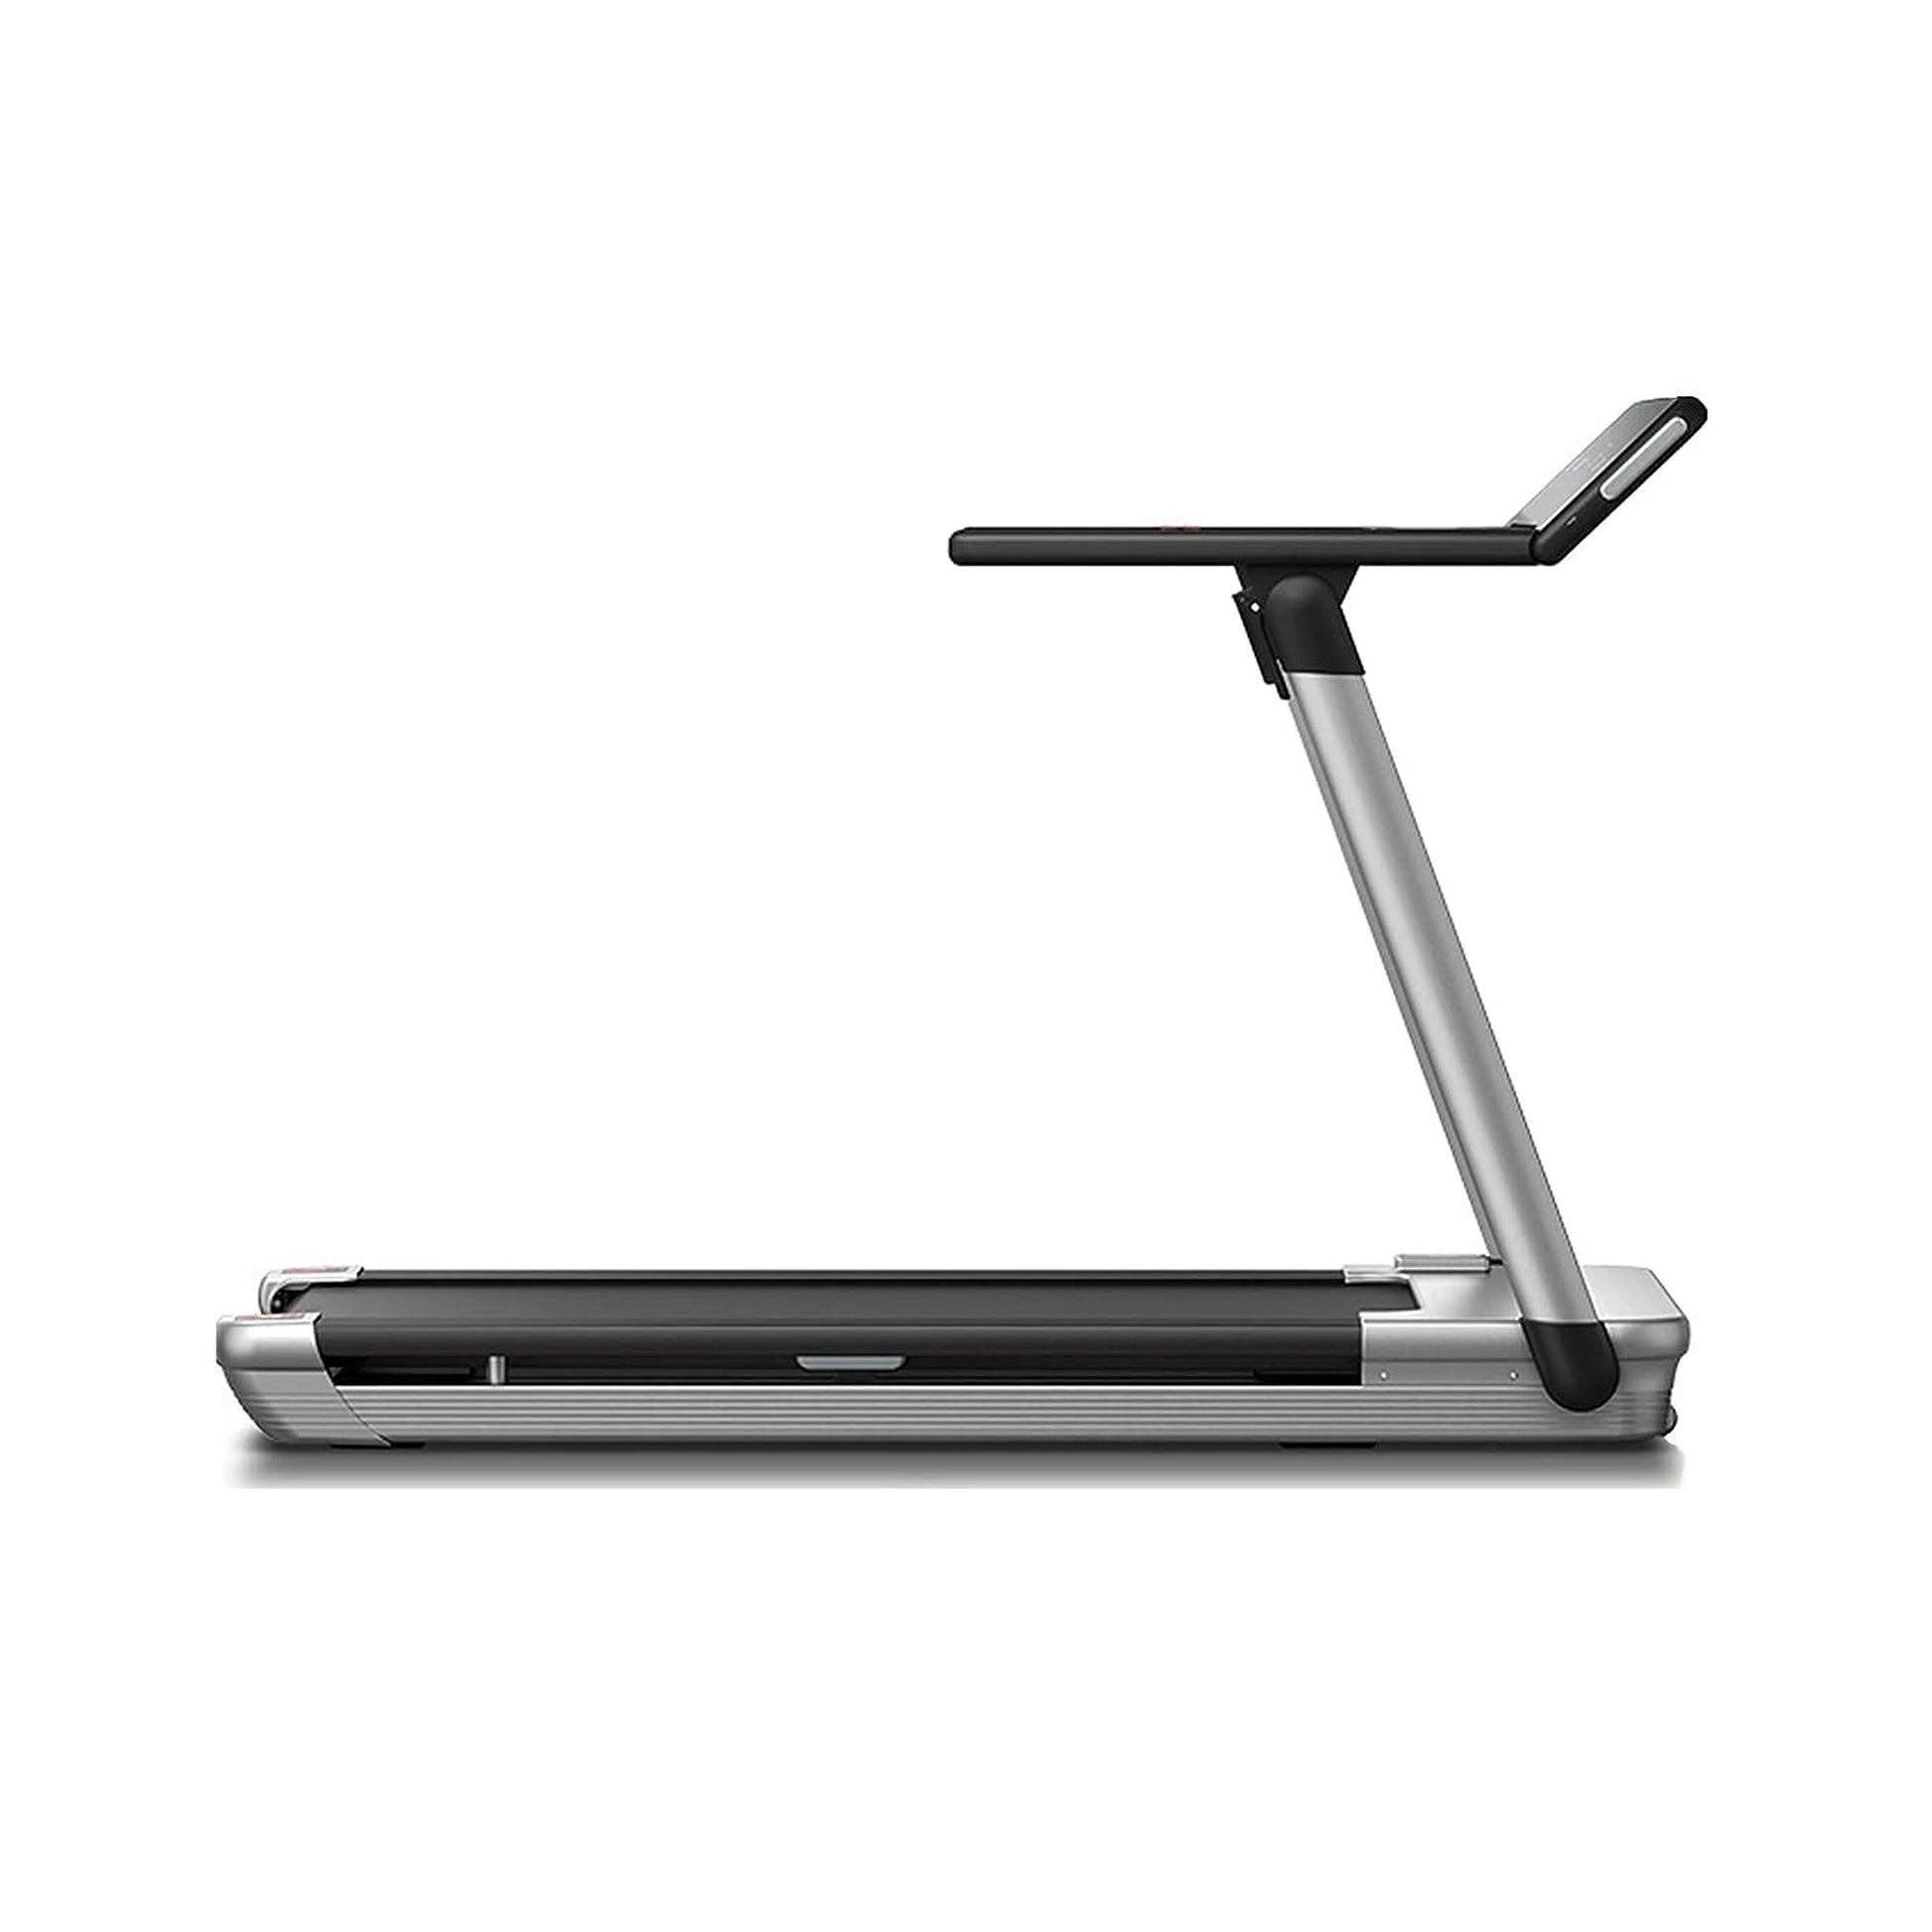 Sky Land Fitness 4.0HP Portable Compact Treadmill, EM-1286